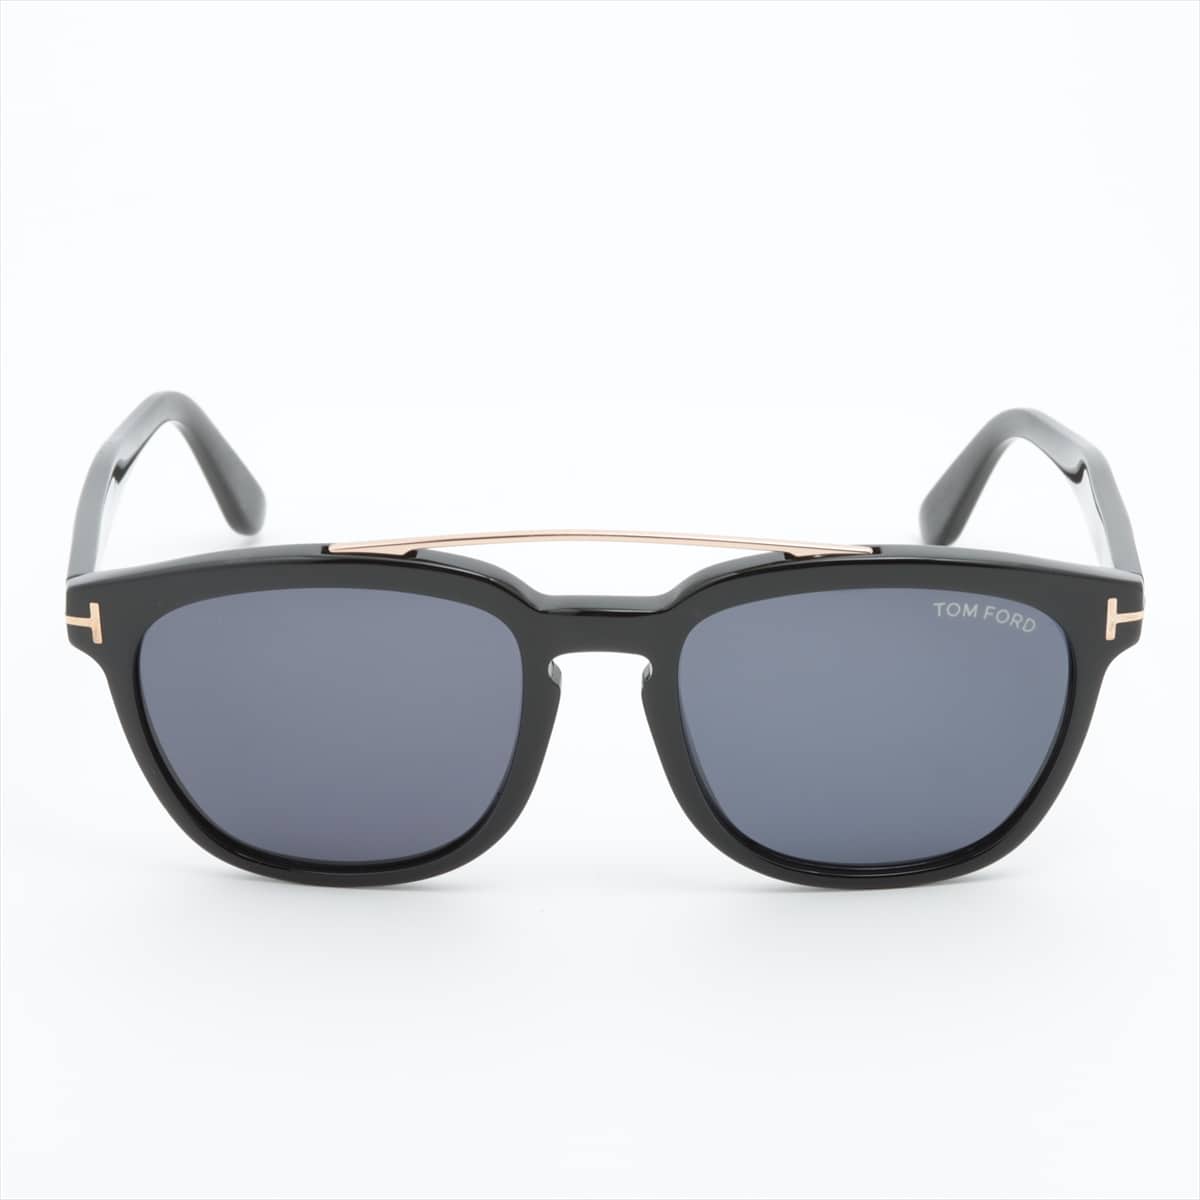 Tom Ford TF516-01A Sunglasses Plastic Black